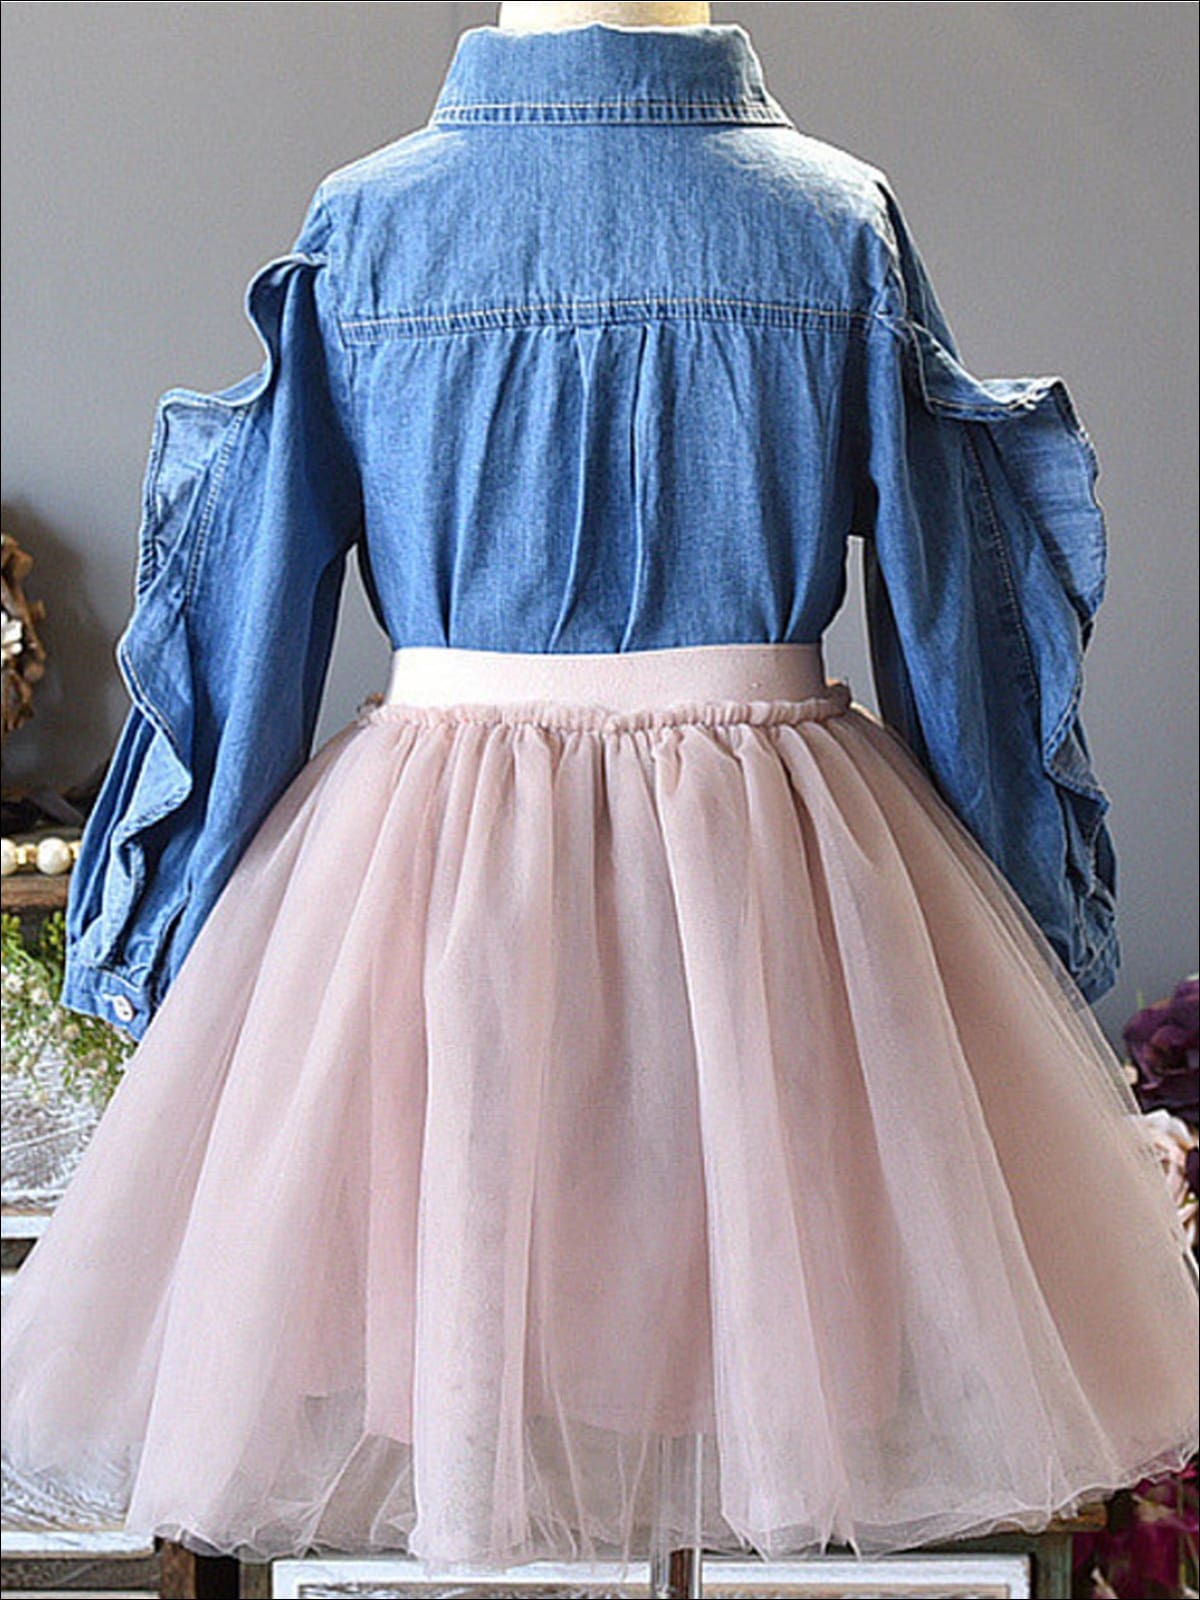 Denim Darling Blouse & Tutu Skirt Set - Back To School - Mia Belle Girls